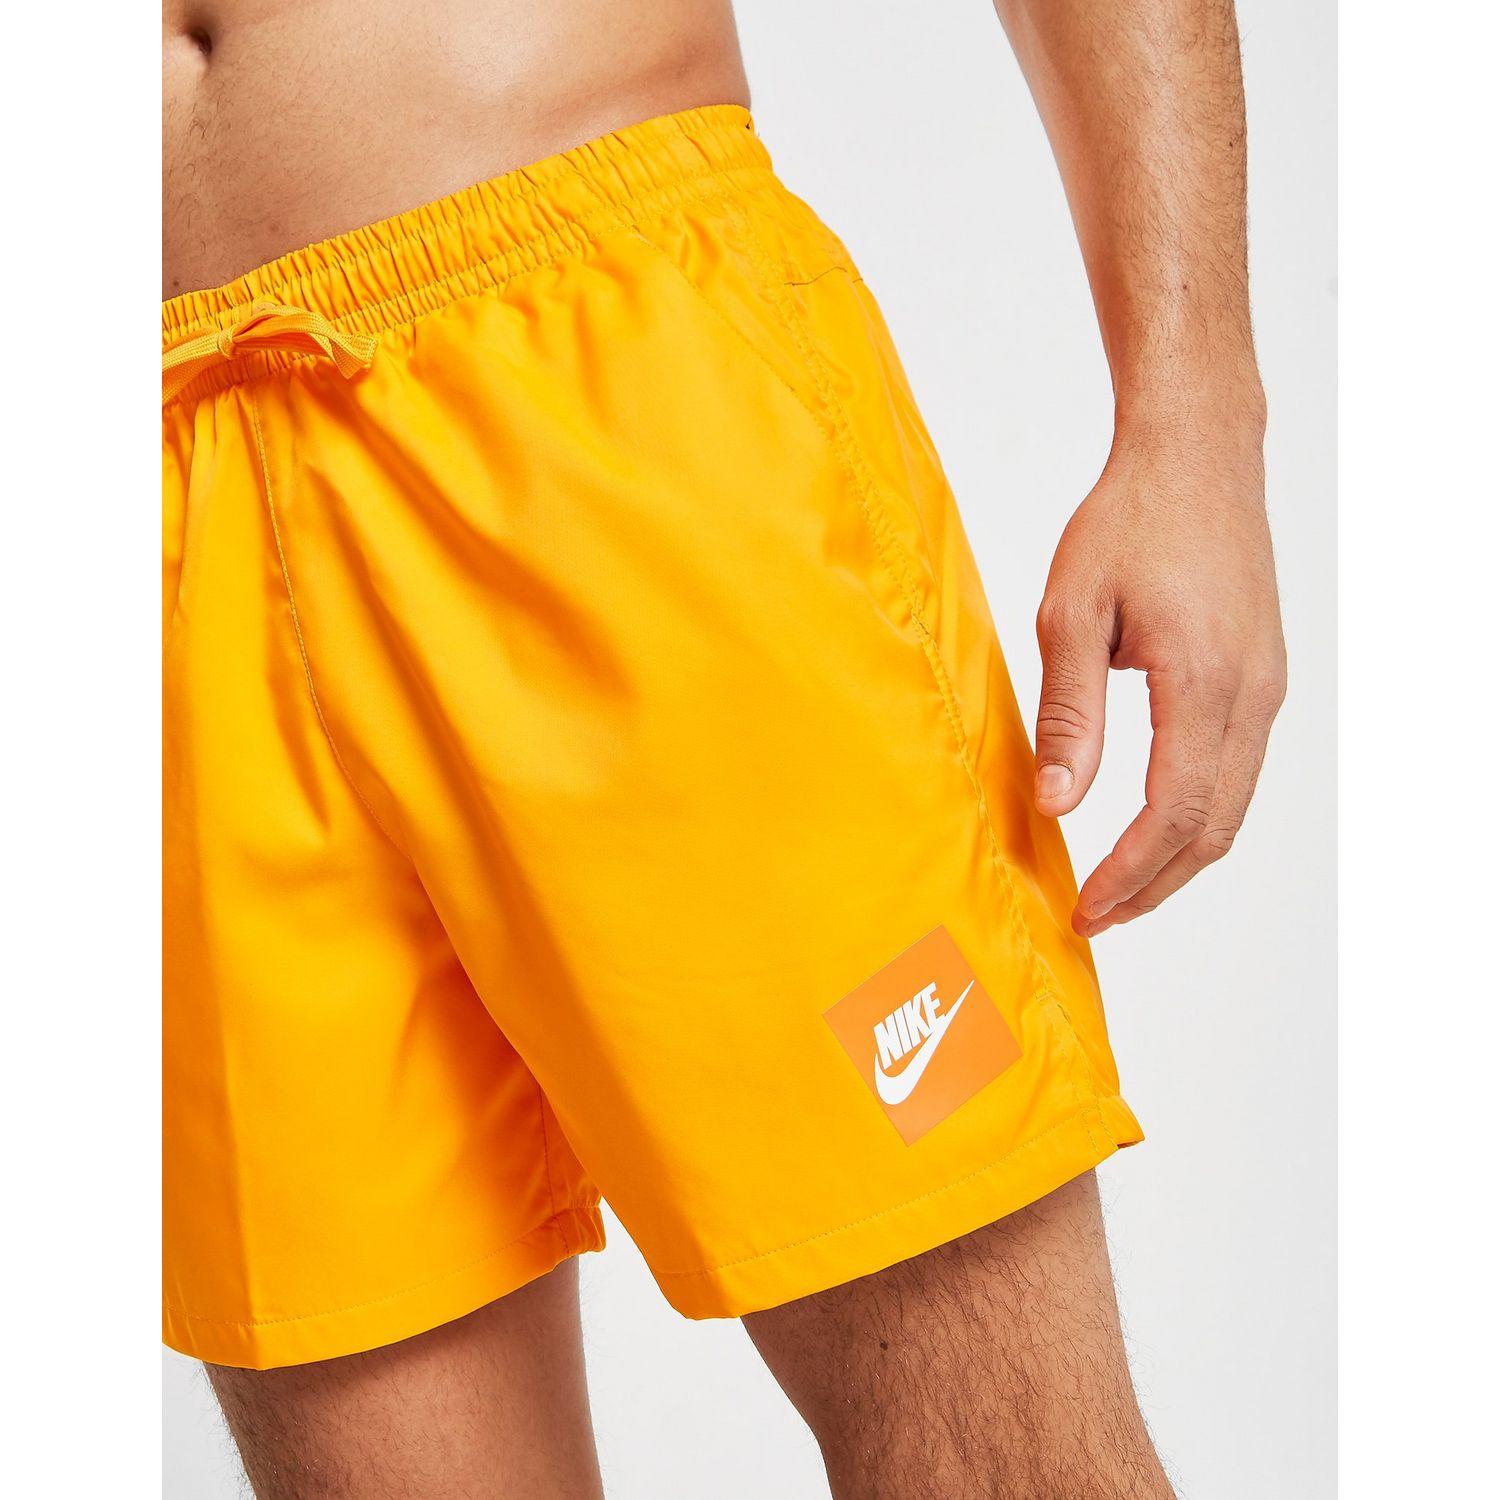 Nike Synthetic Hotbox Flow Swim Shorts in Orange/White (Orange) for Men -  Lyst